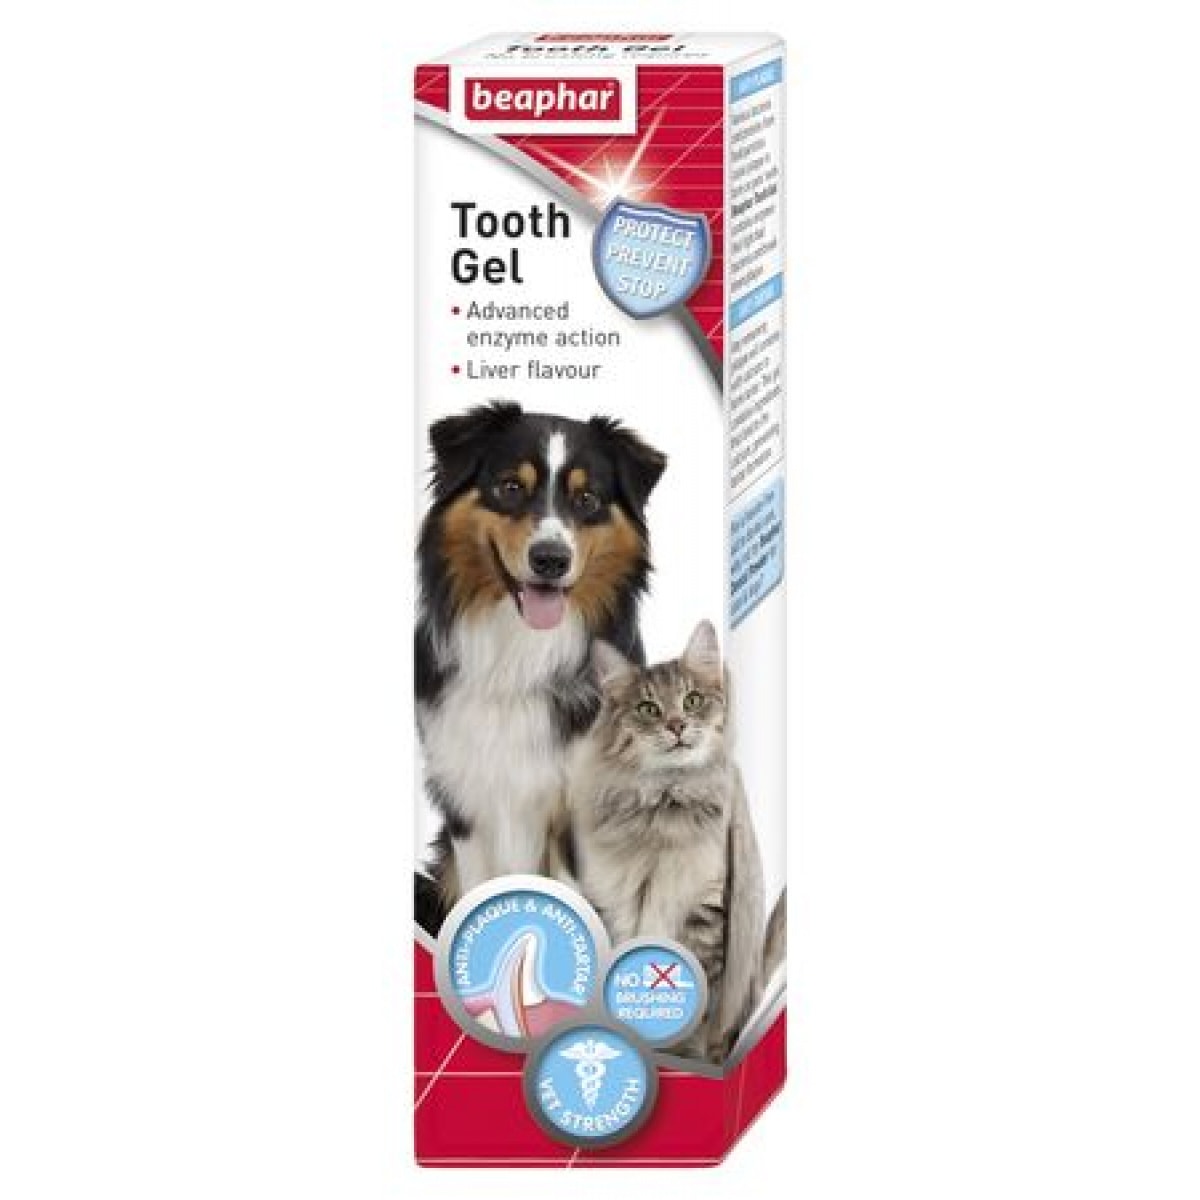 Beaphar Toothgel – Pawfect Supplies Ltd Product Image